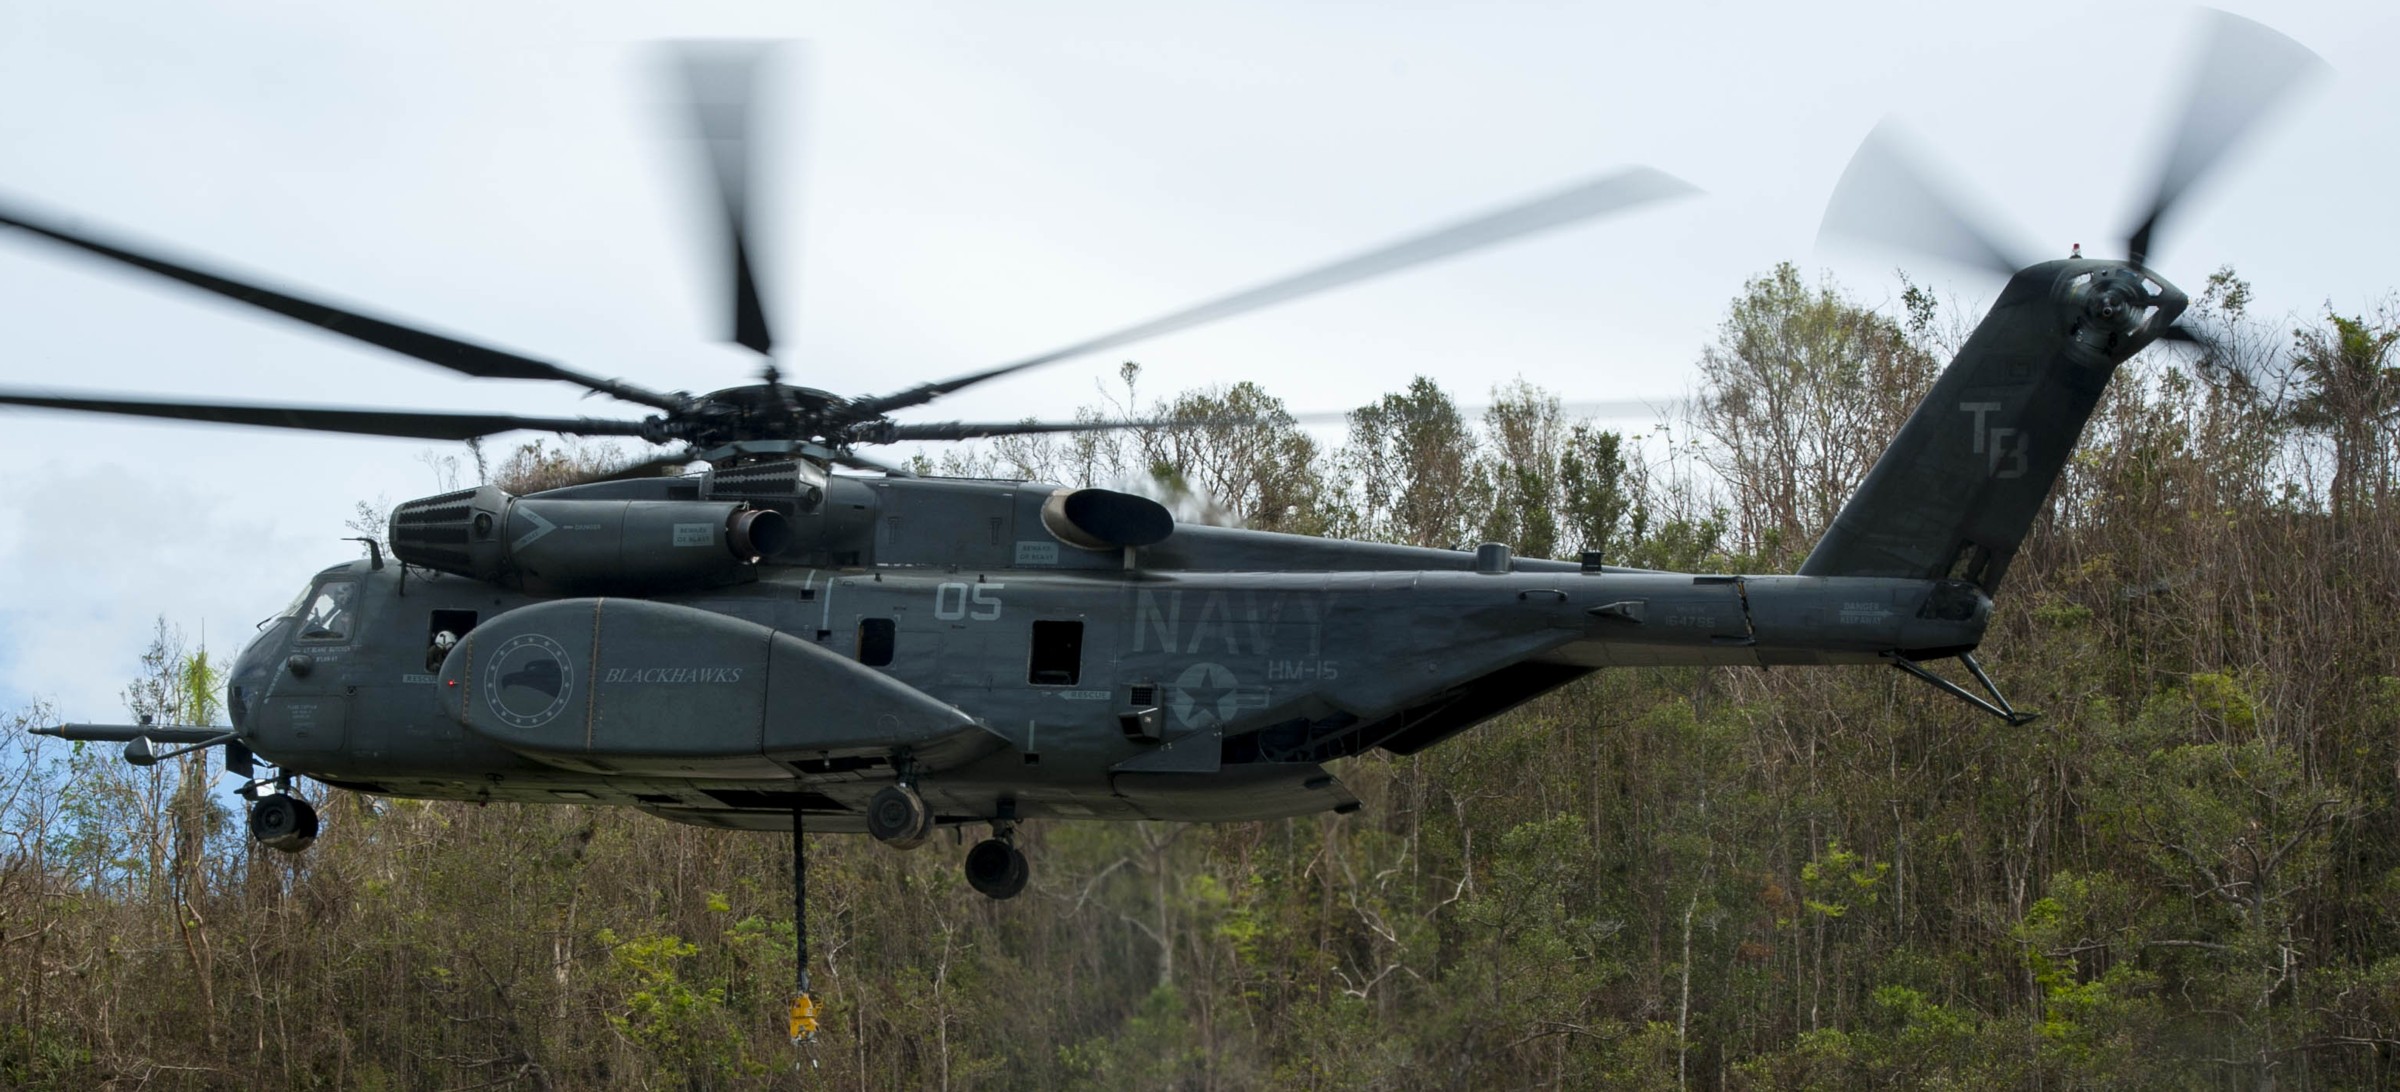 hm-15 blackhawks helicopter mine countermeasures squadron navy mh-53e sea dragon 13